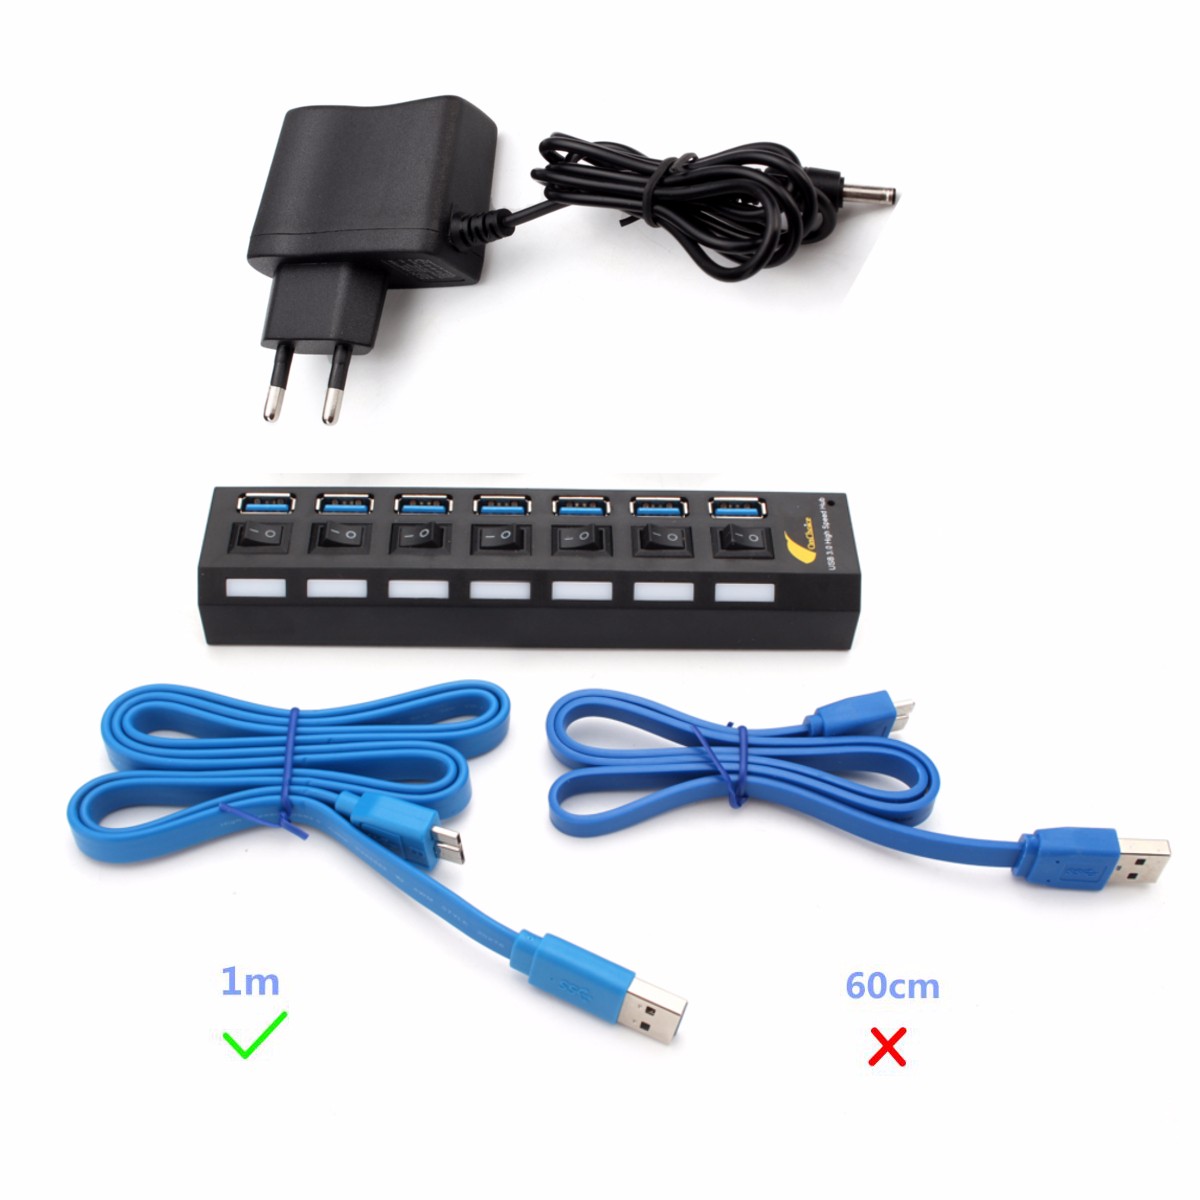 ONCHOICE 7Port USB 3.0 Hub On/Off Switch EU US UK AC Power Adapter For Laptop Desktop 47